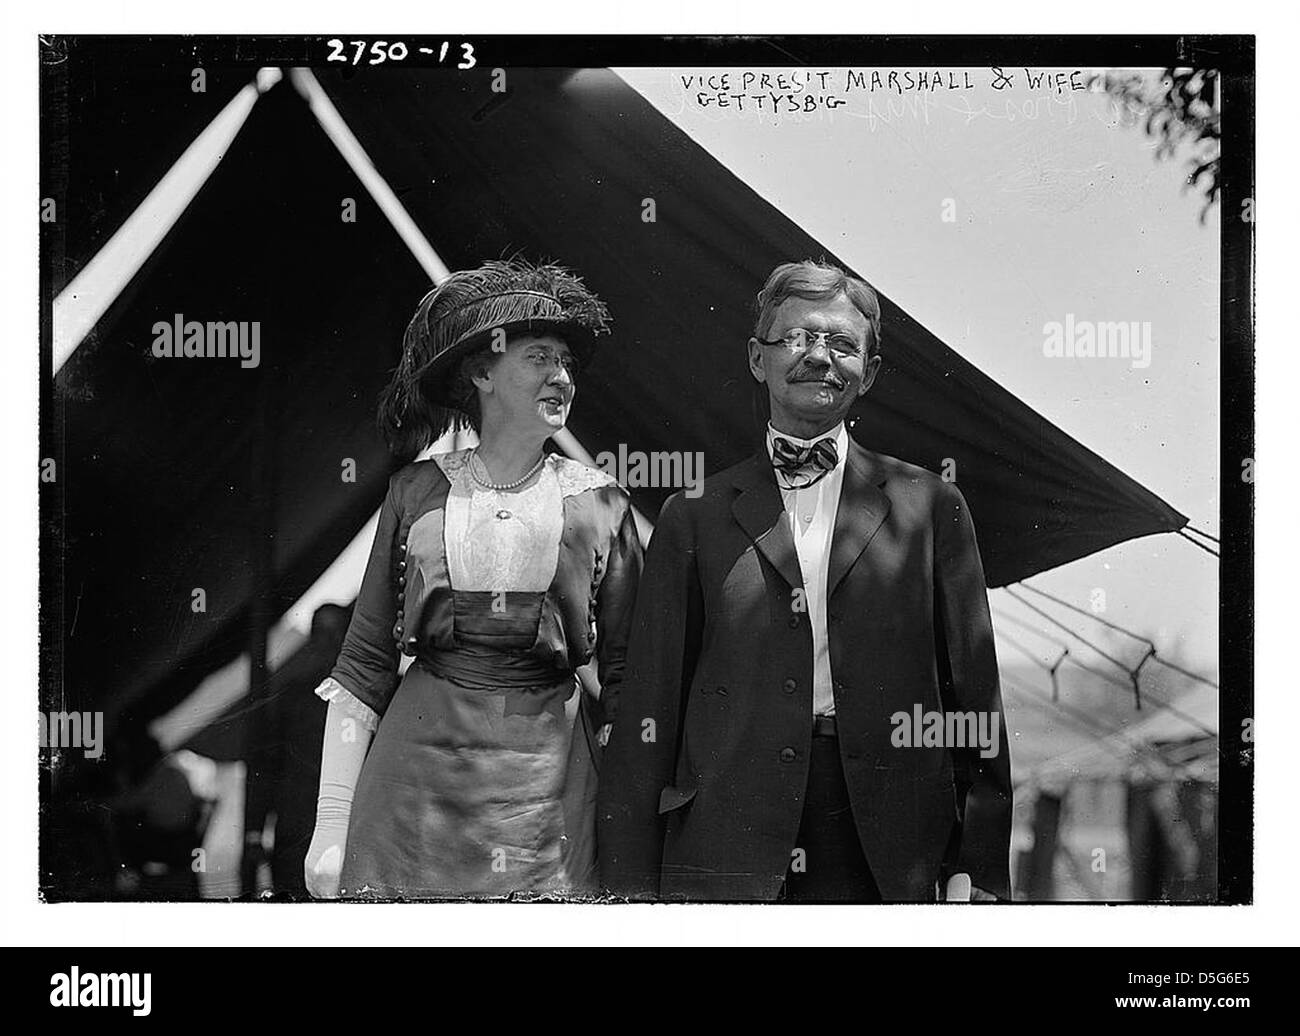 Vice Pres't Marshall & wife - Gettysburg (LOC) Stock Photo